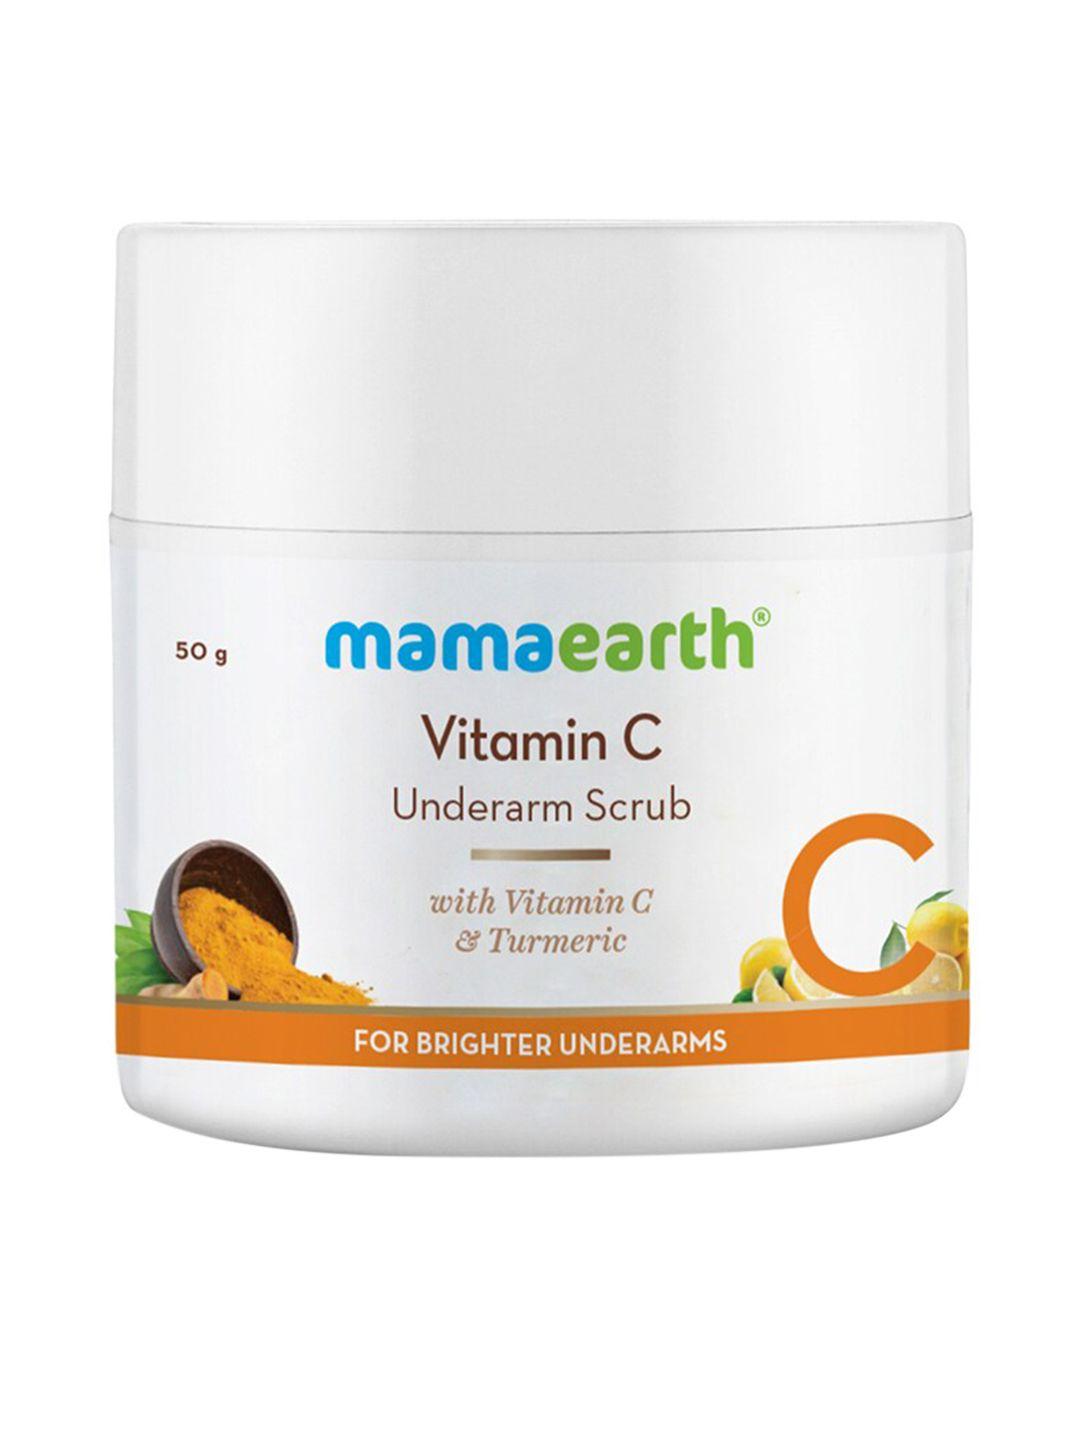 mamaearth vitamin c underarm scrub with turmeric 50 g